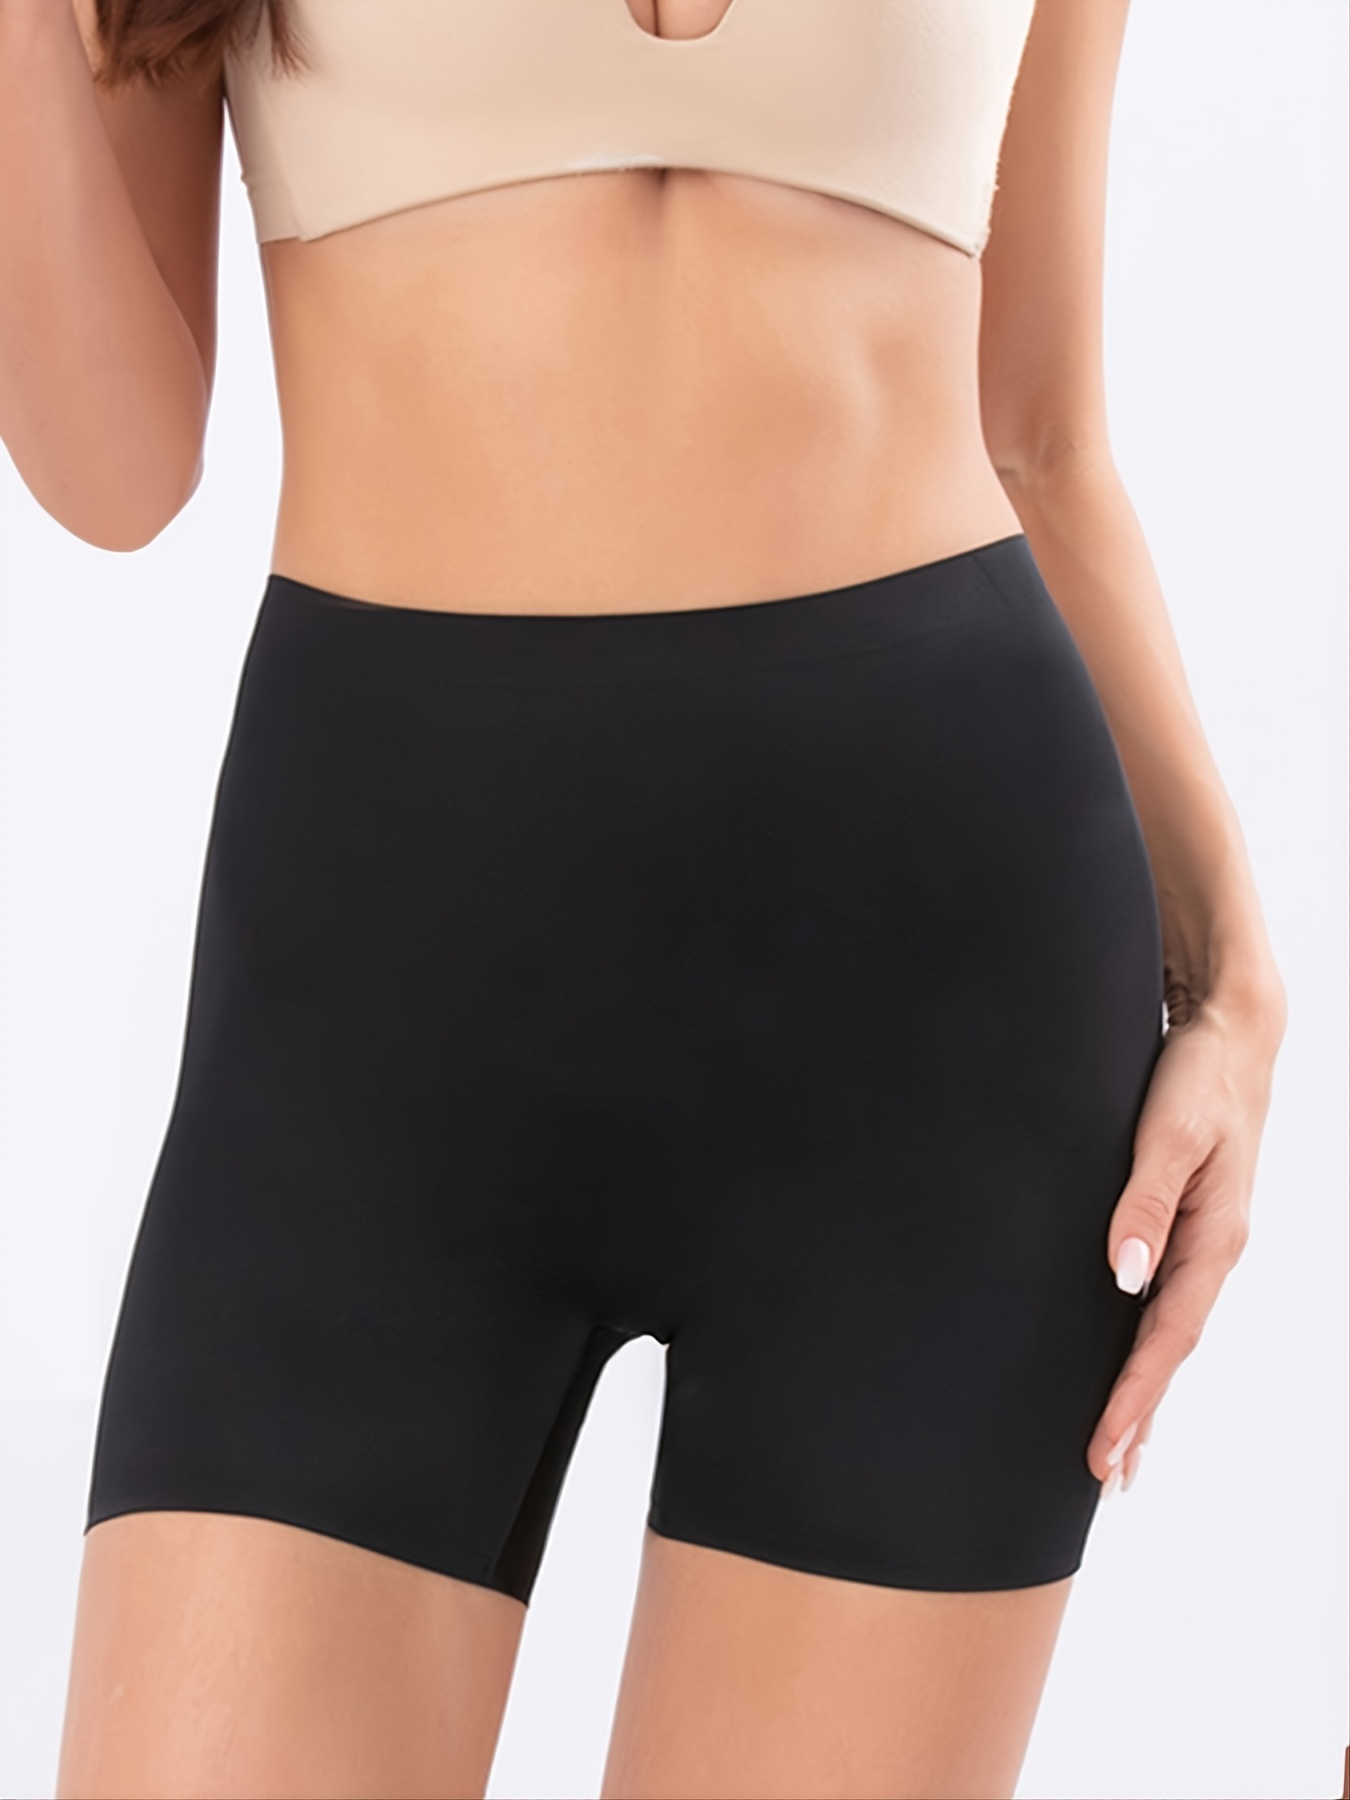 Slip Shorts Shapewear For Under Dresses Women Seamless Boyshorts Panties  Anti Chafing Underwear Shorts Waist Trainer Body Shaper Black